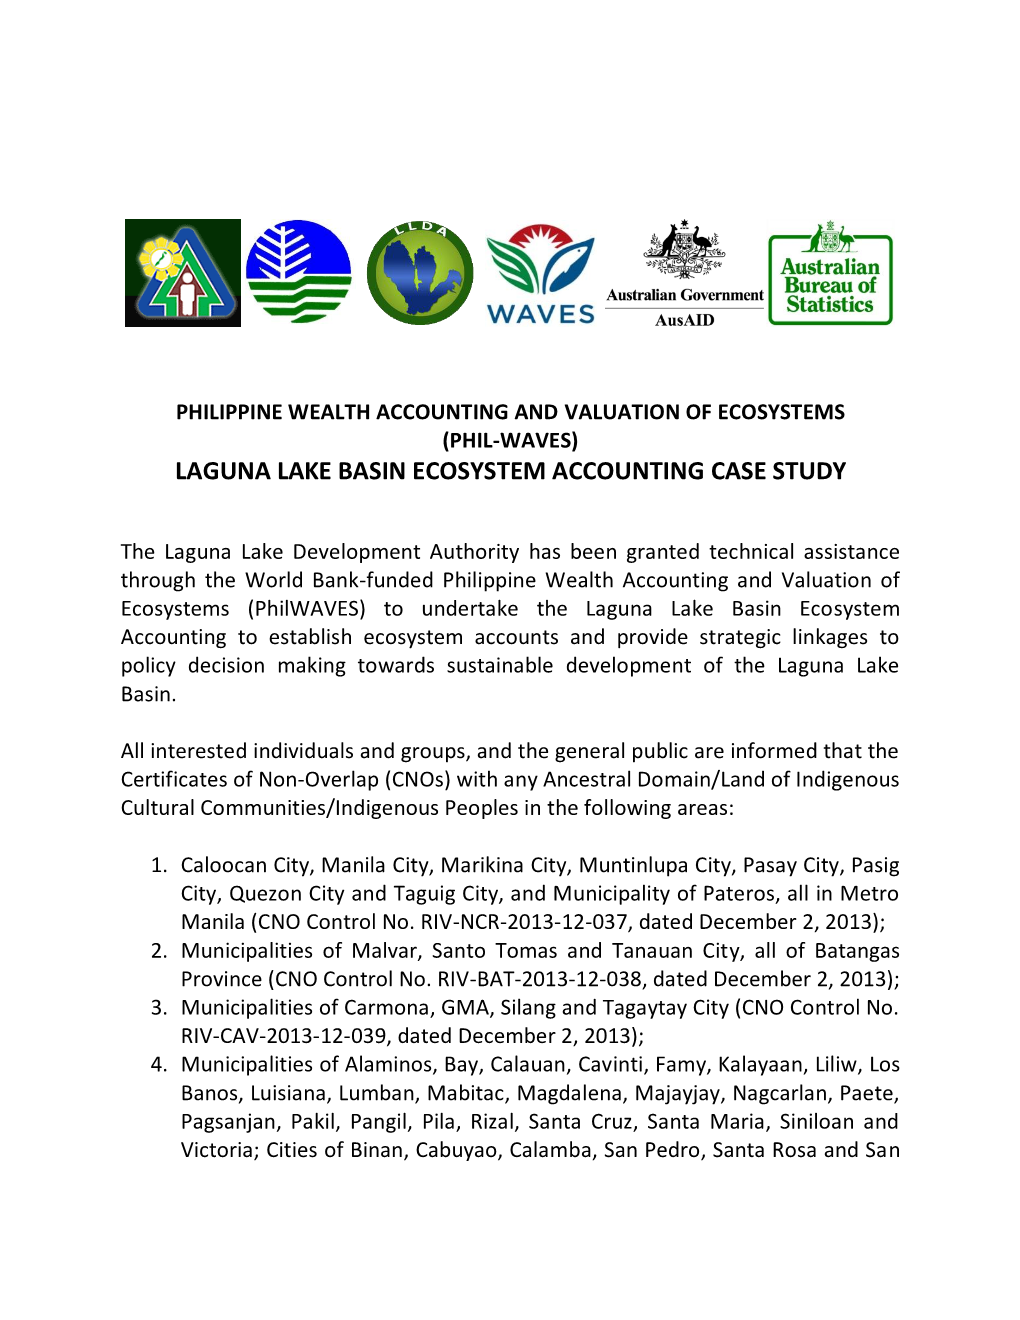 Laguna Lake Basin Ecosystem Accounting Case Study